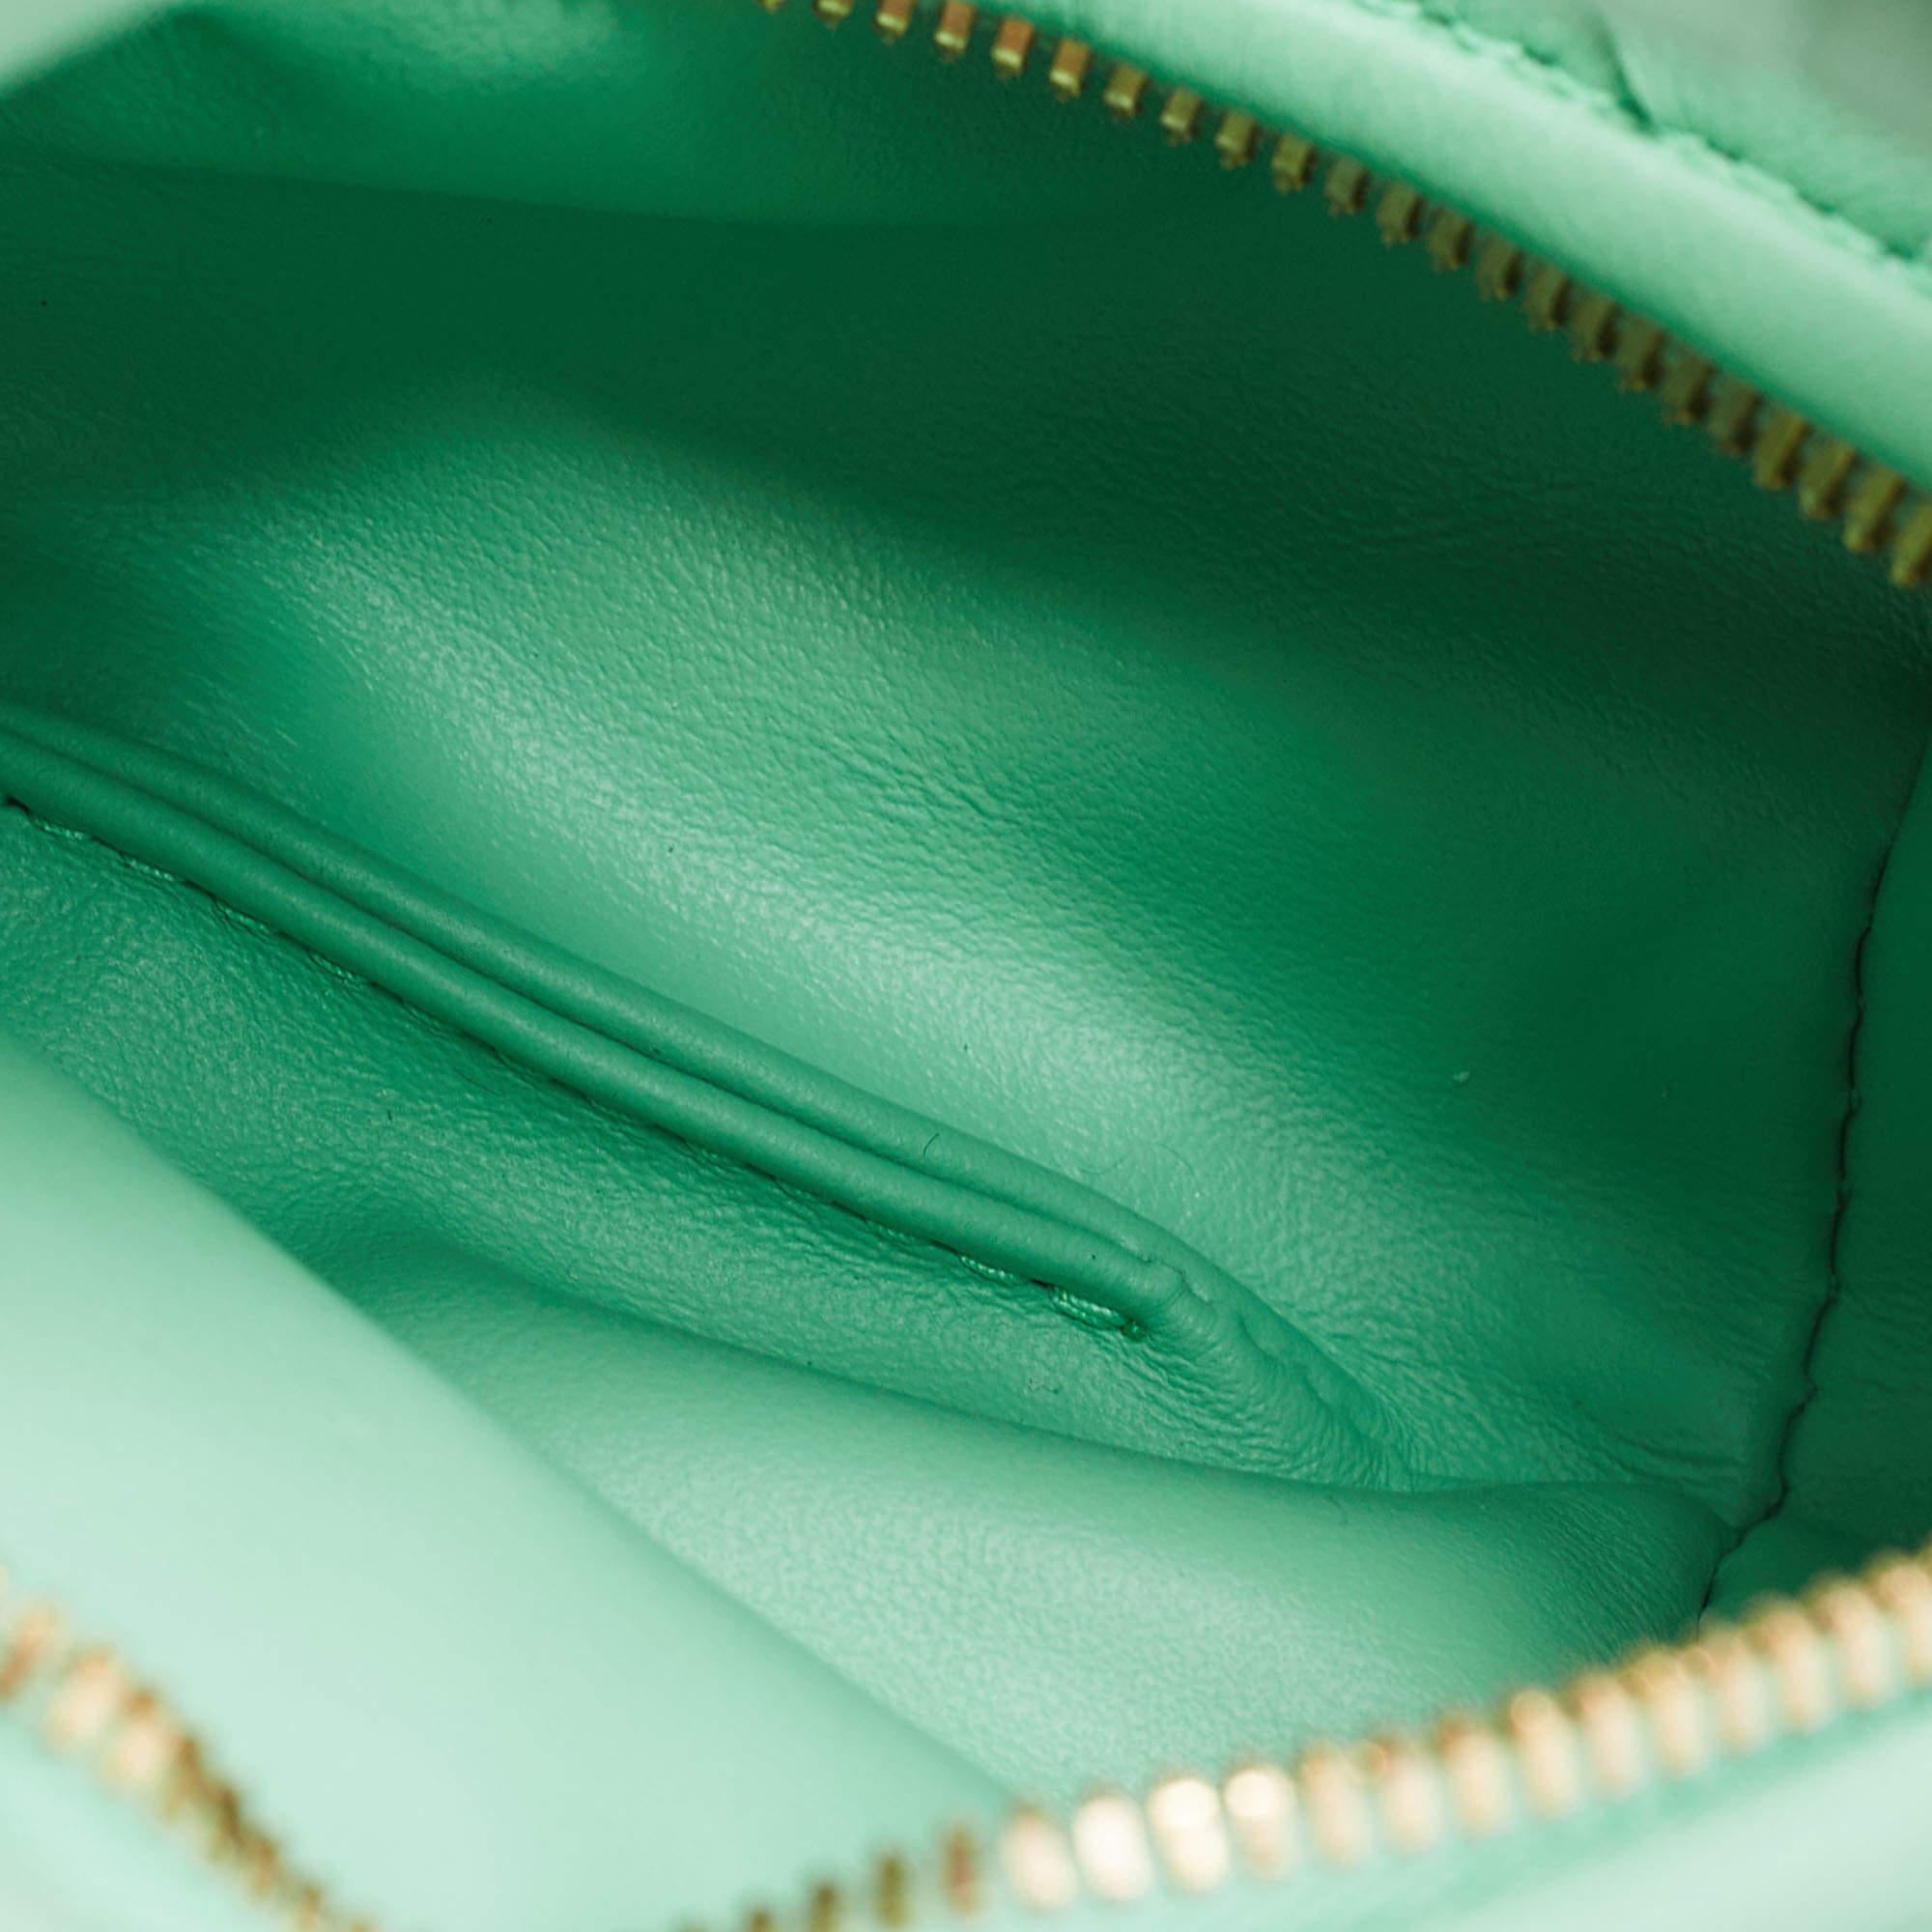 Bottega Veneta Mint Green Intrecciato Leather Candy Jodie Bag 5